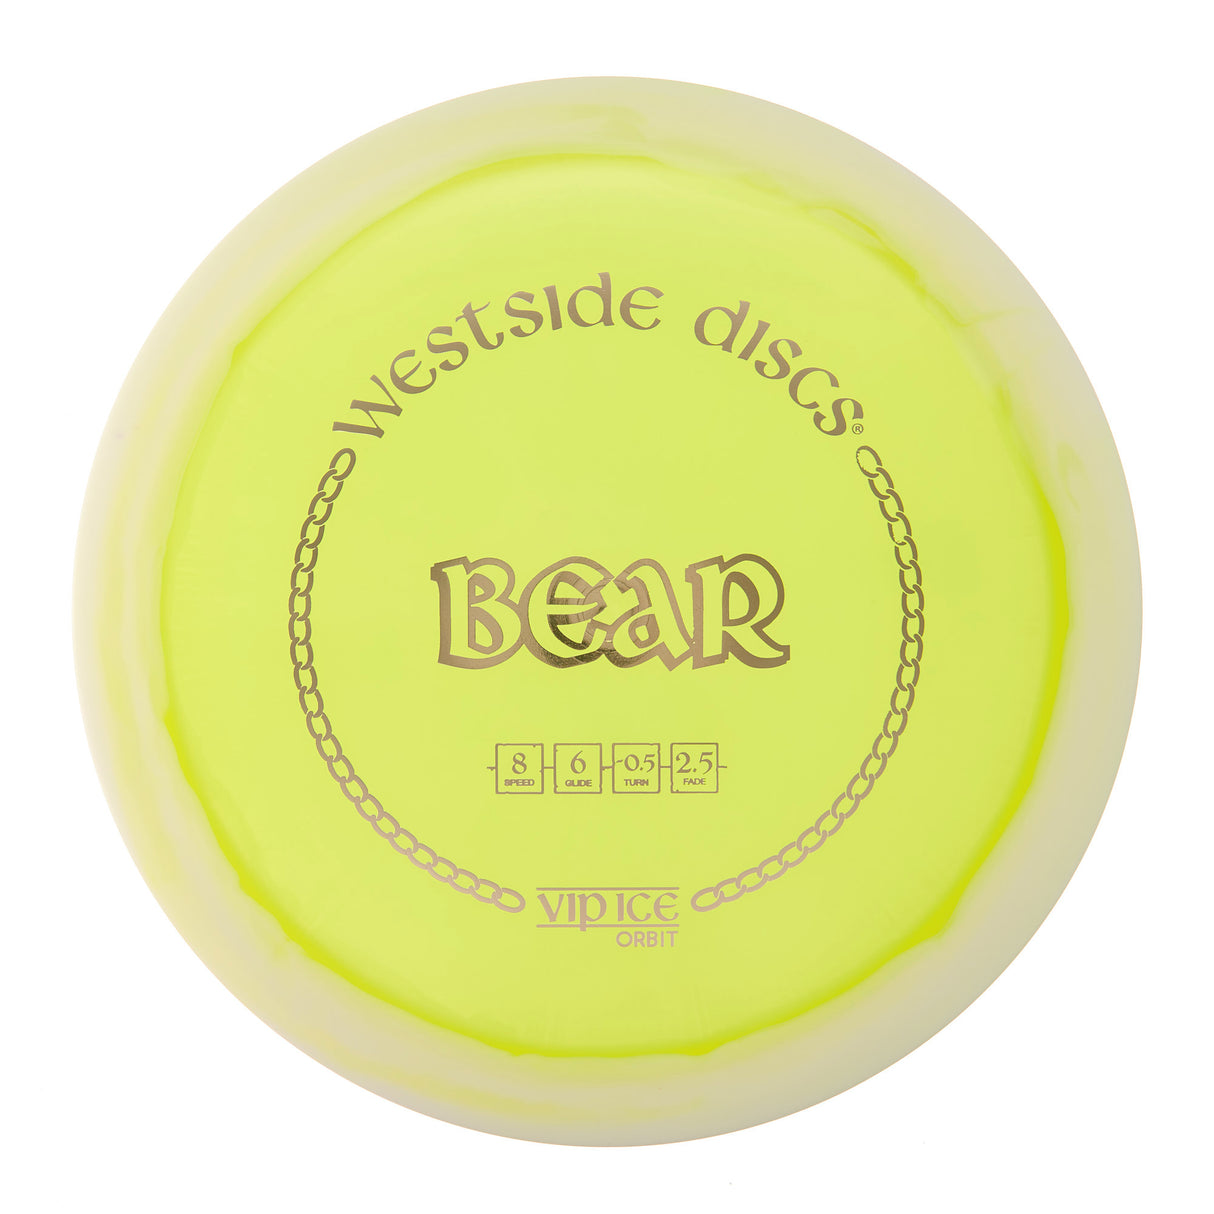 Westside Bear - VIP Ice Orbit 175g | Style 0016